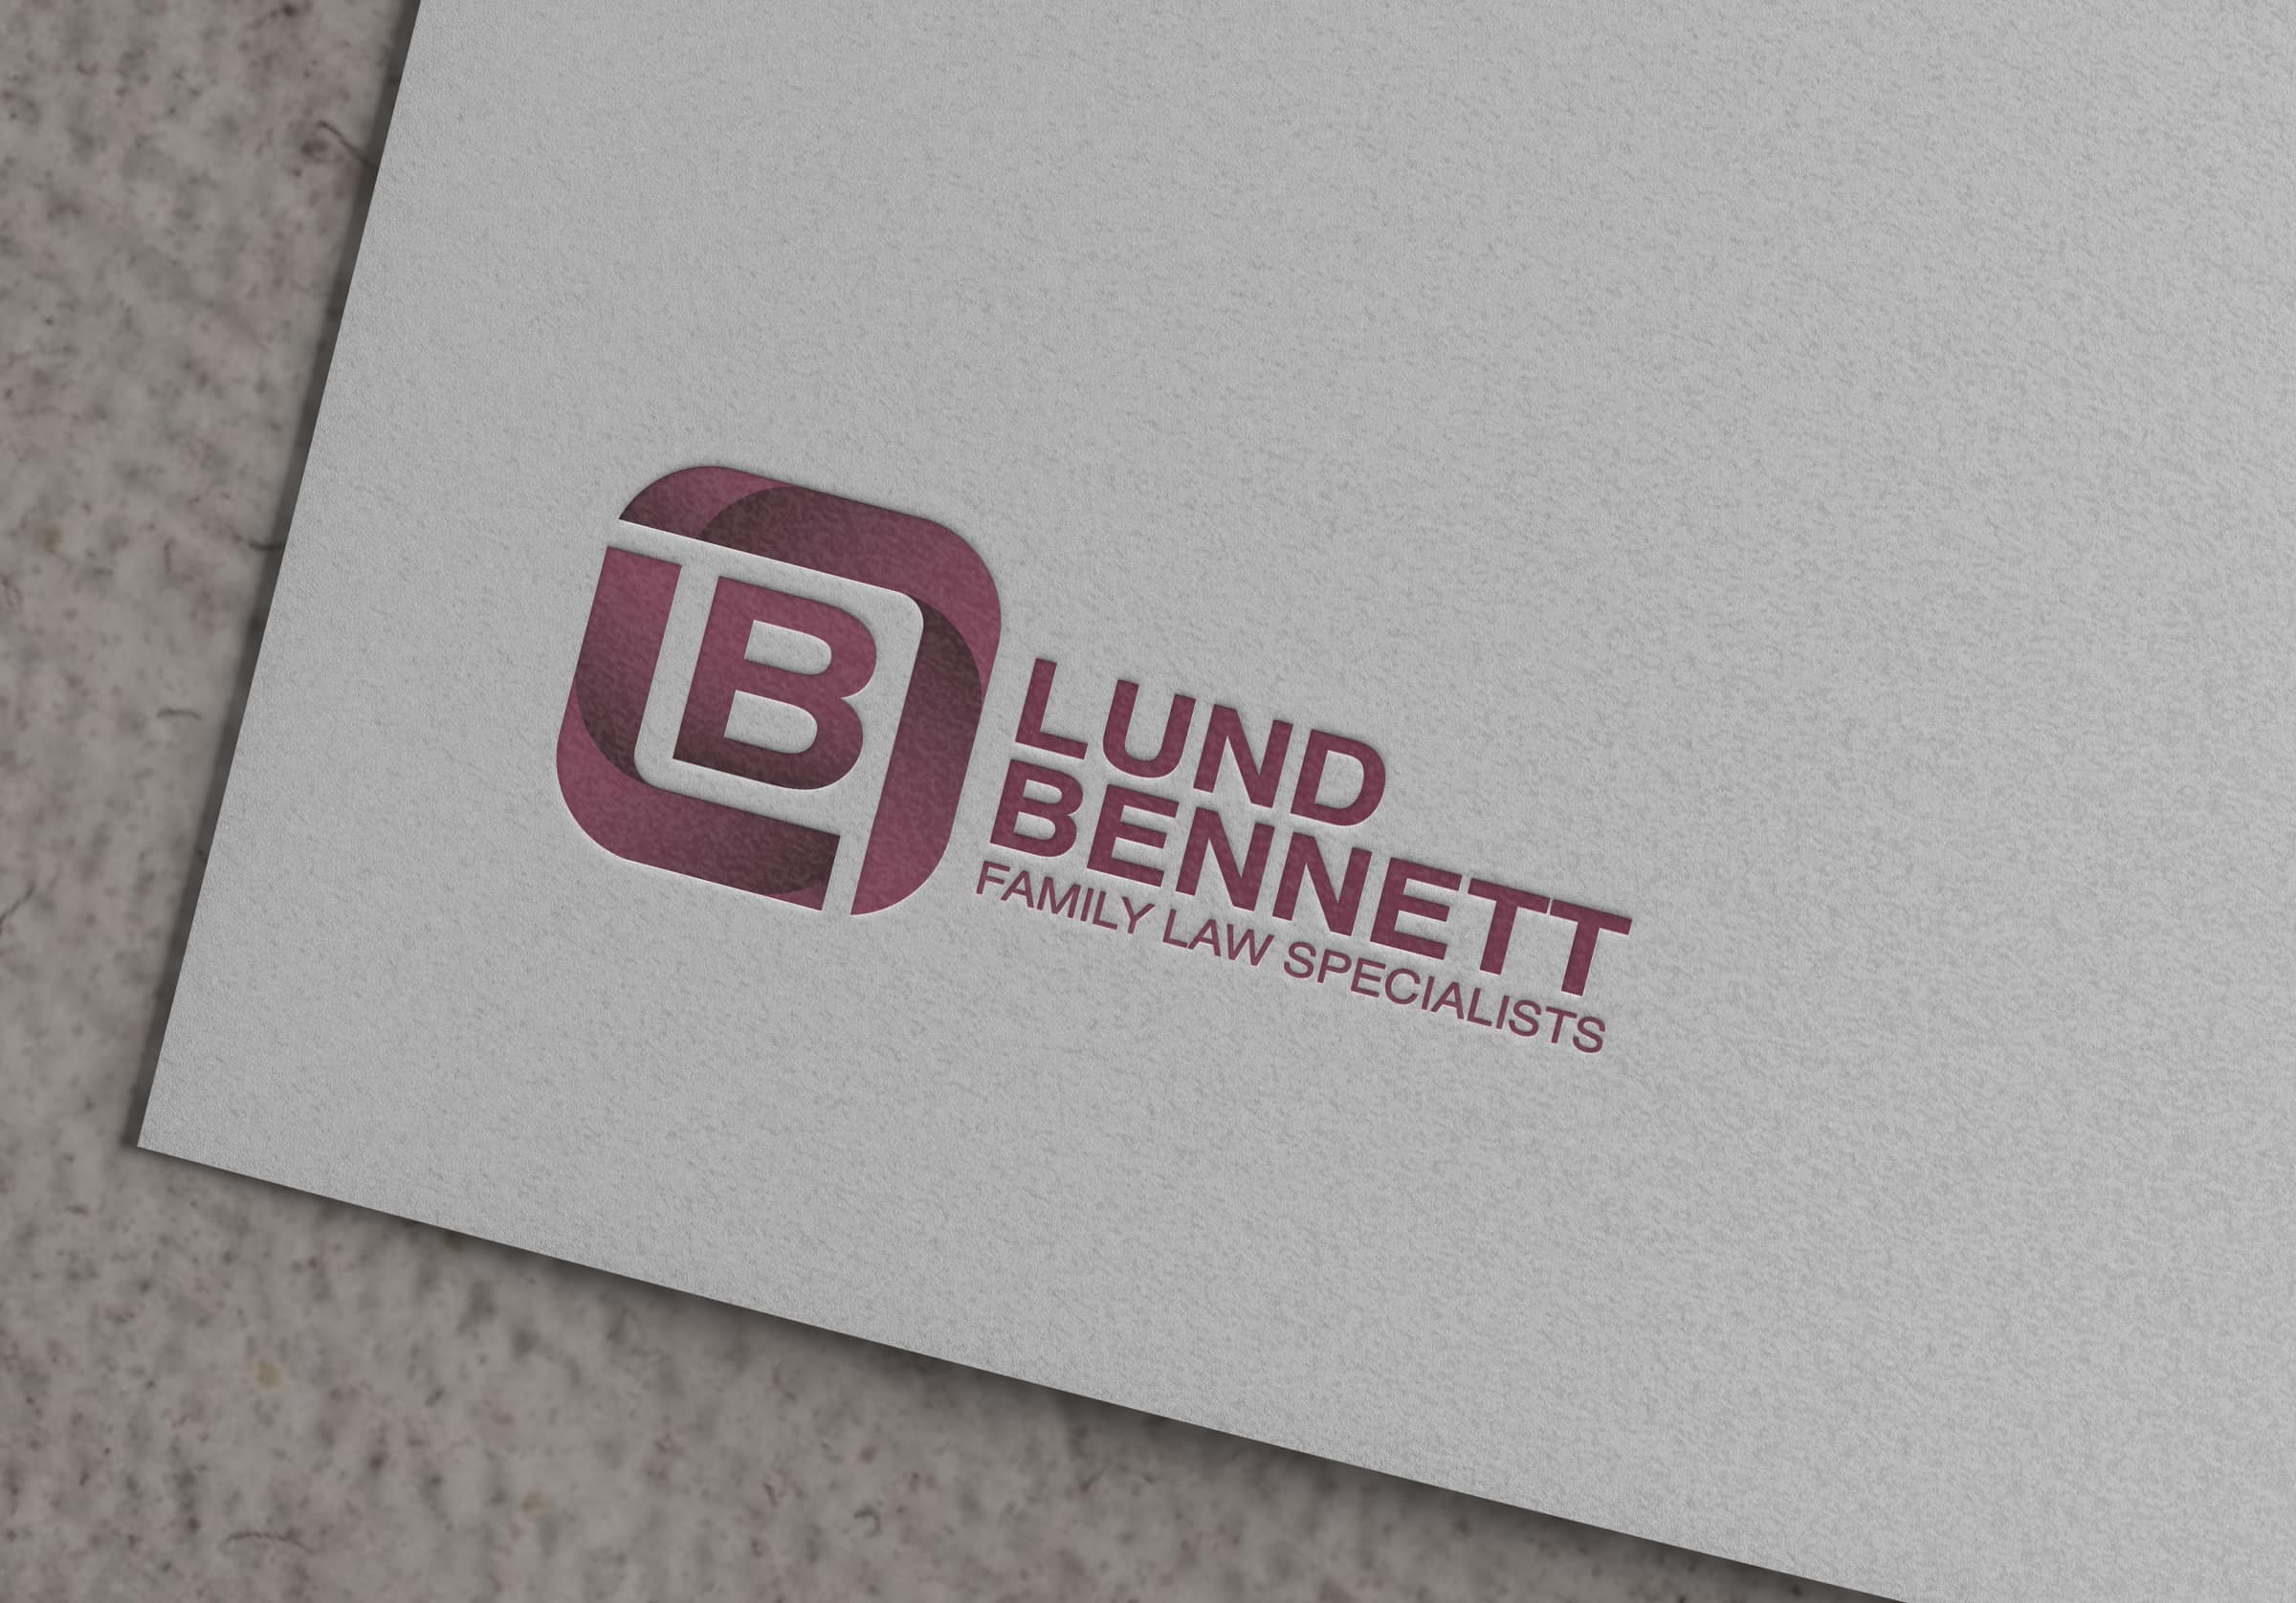 Give the Dog a Bone: Lund Bennett